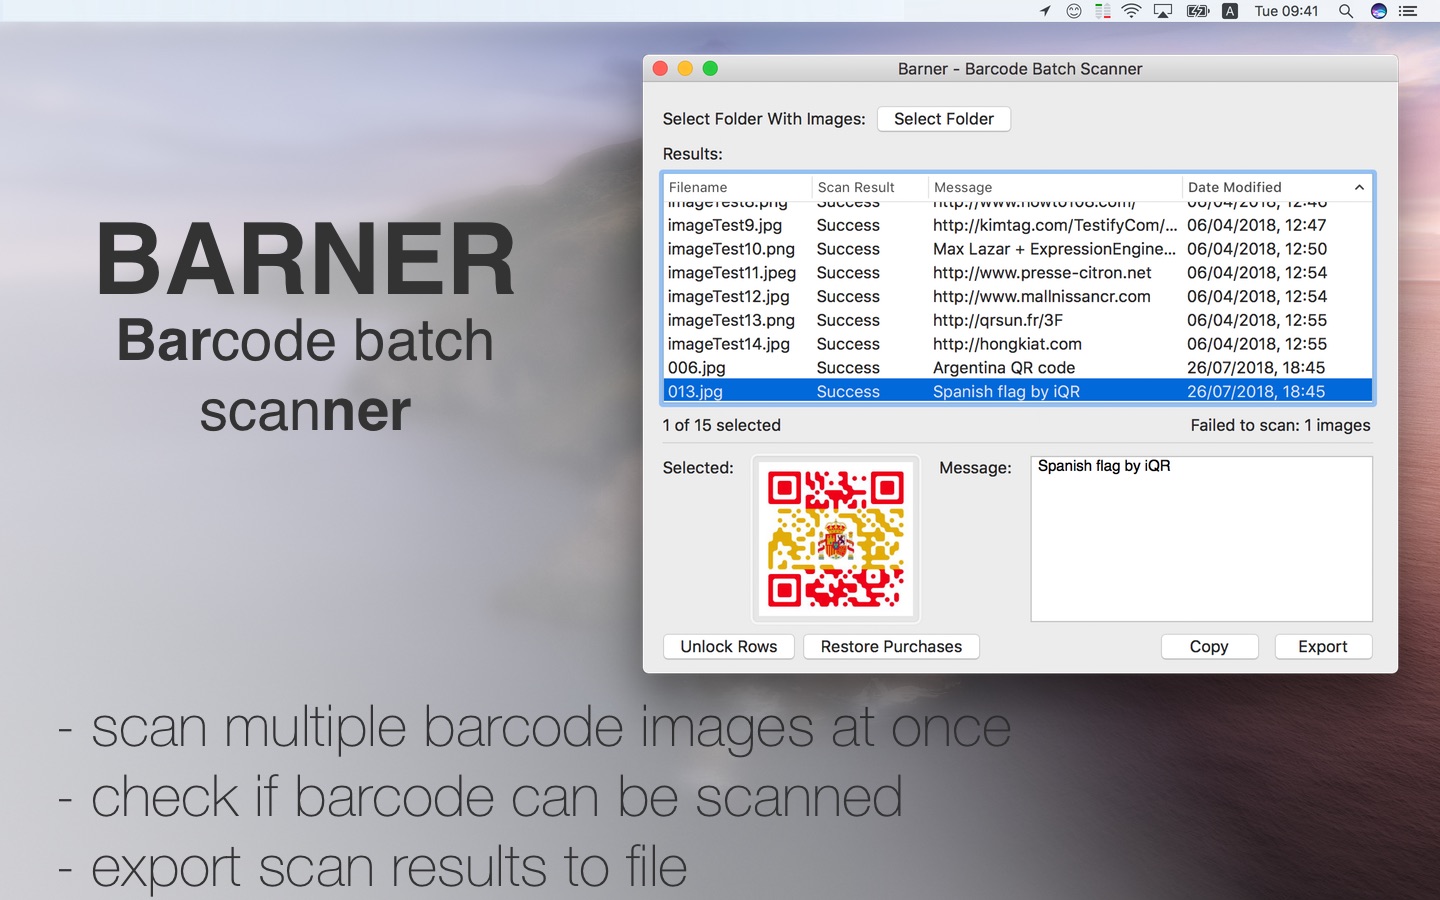 Barner - Barcode Batch Scanner 1.4 : Main Window